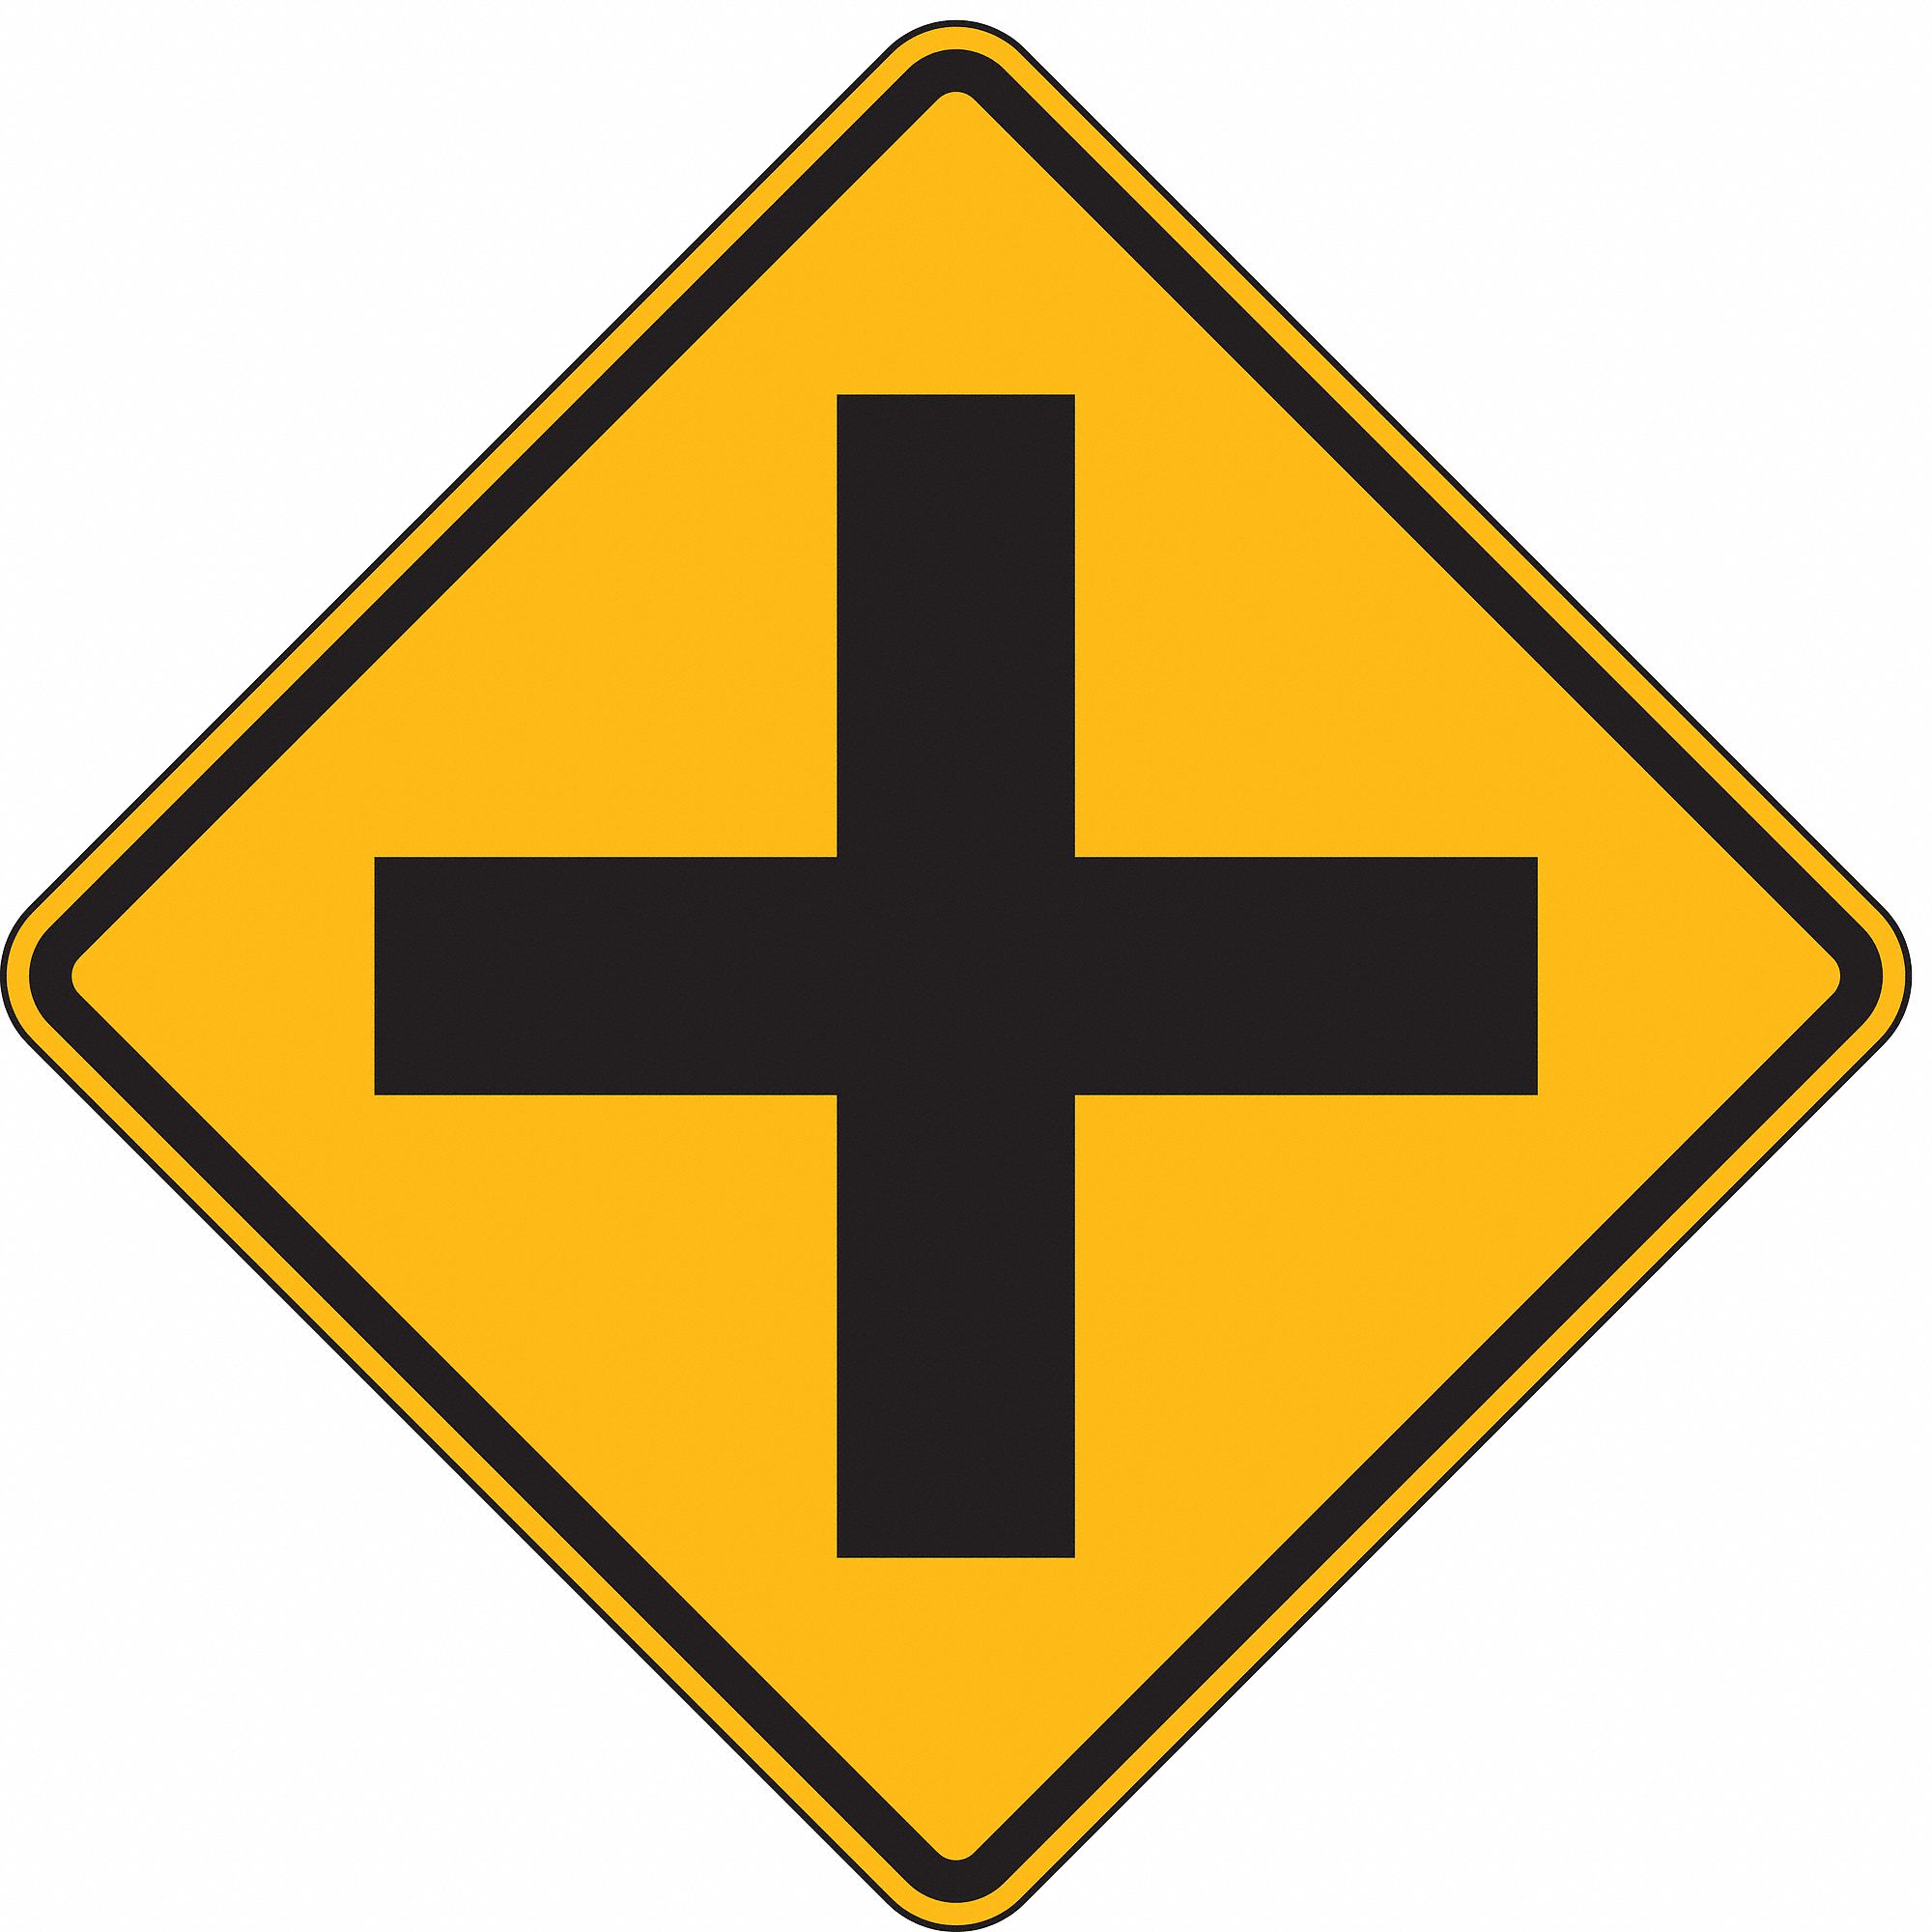 24 in x 24 in Nominal Sign Size, Aluminum, Traffic Sign - 3PME3|W2-1-24HA - Grainger